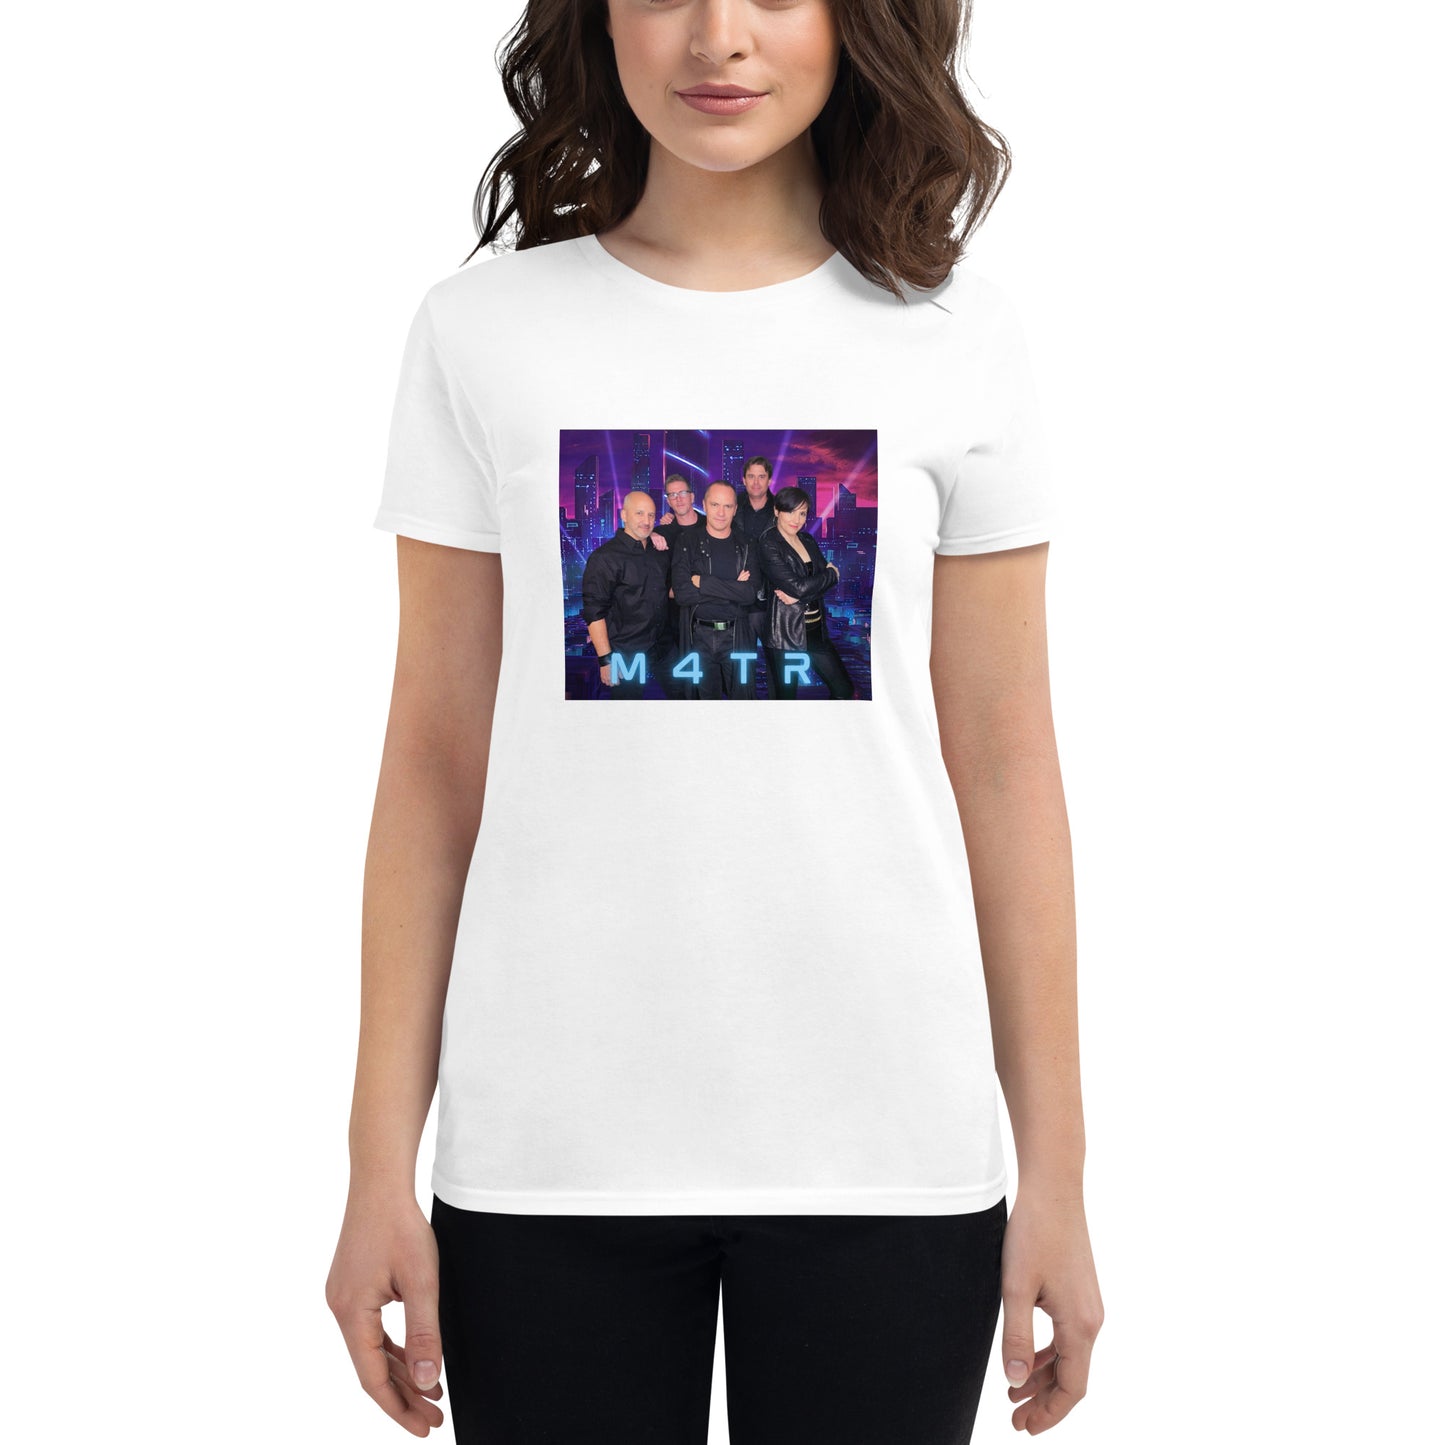 Women's Short Sleeve T-shirt (Darkwave Band)